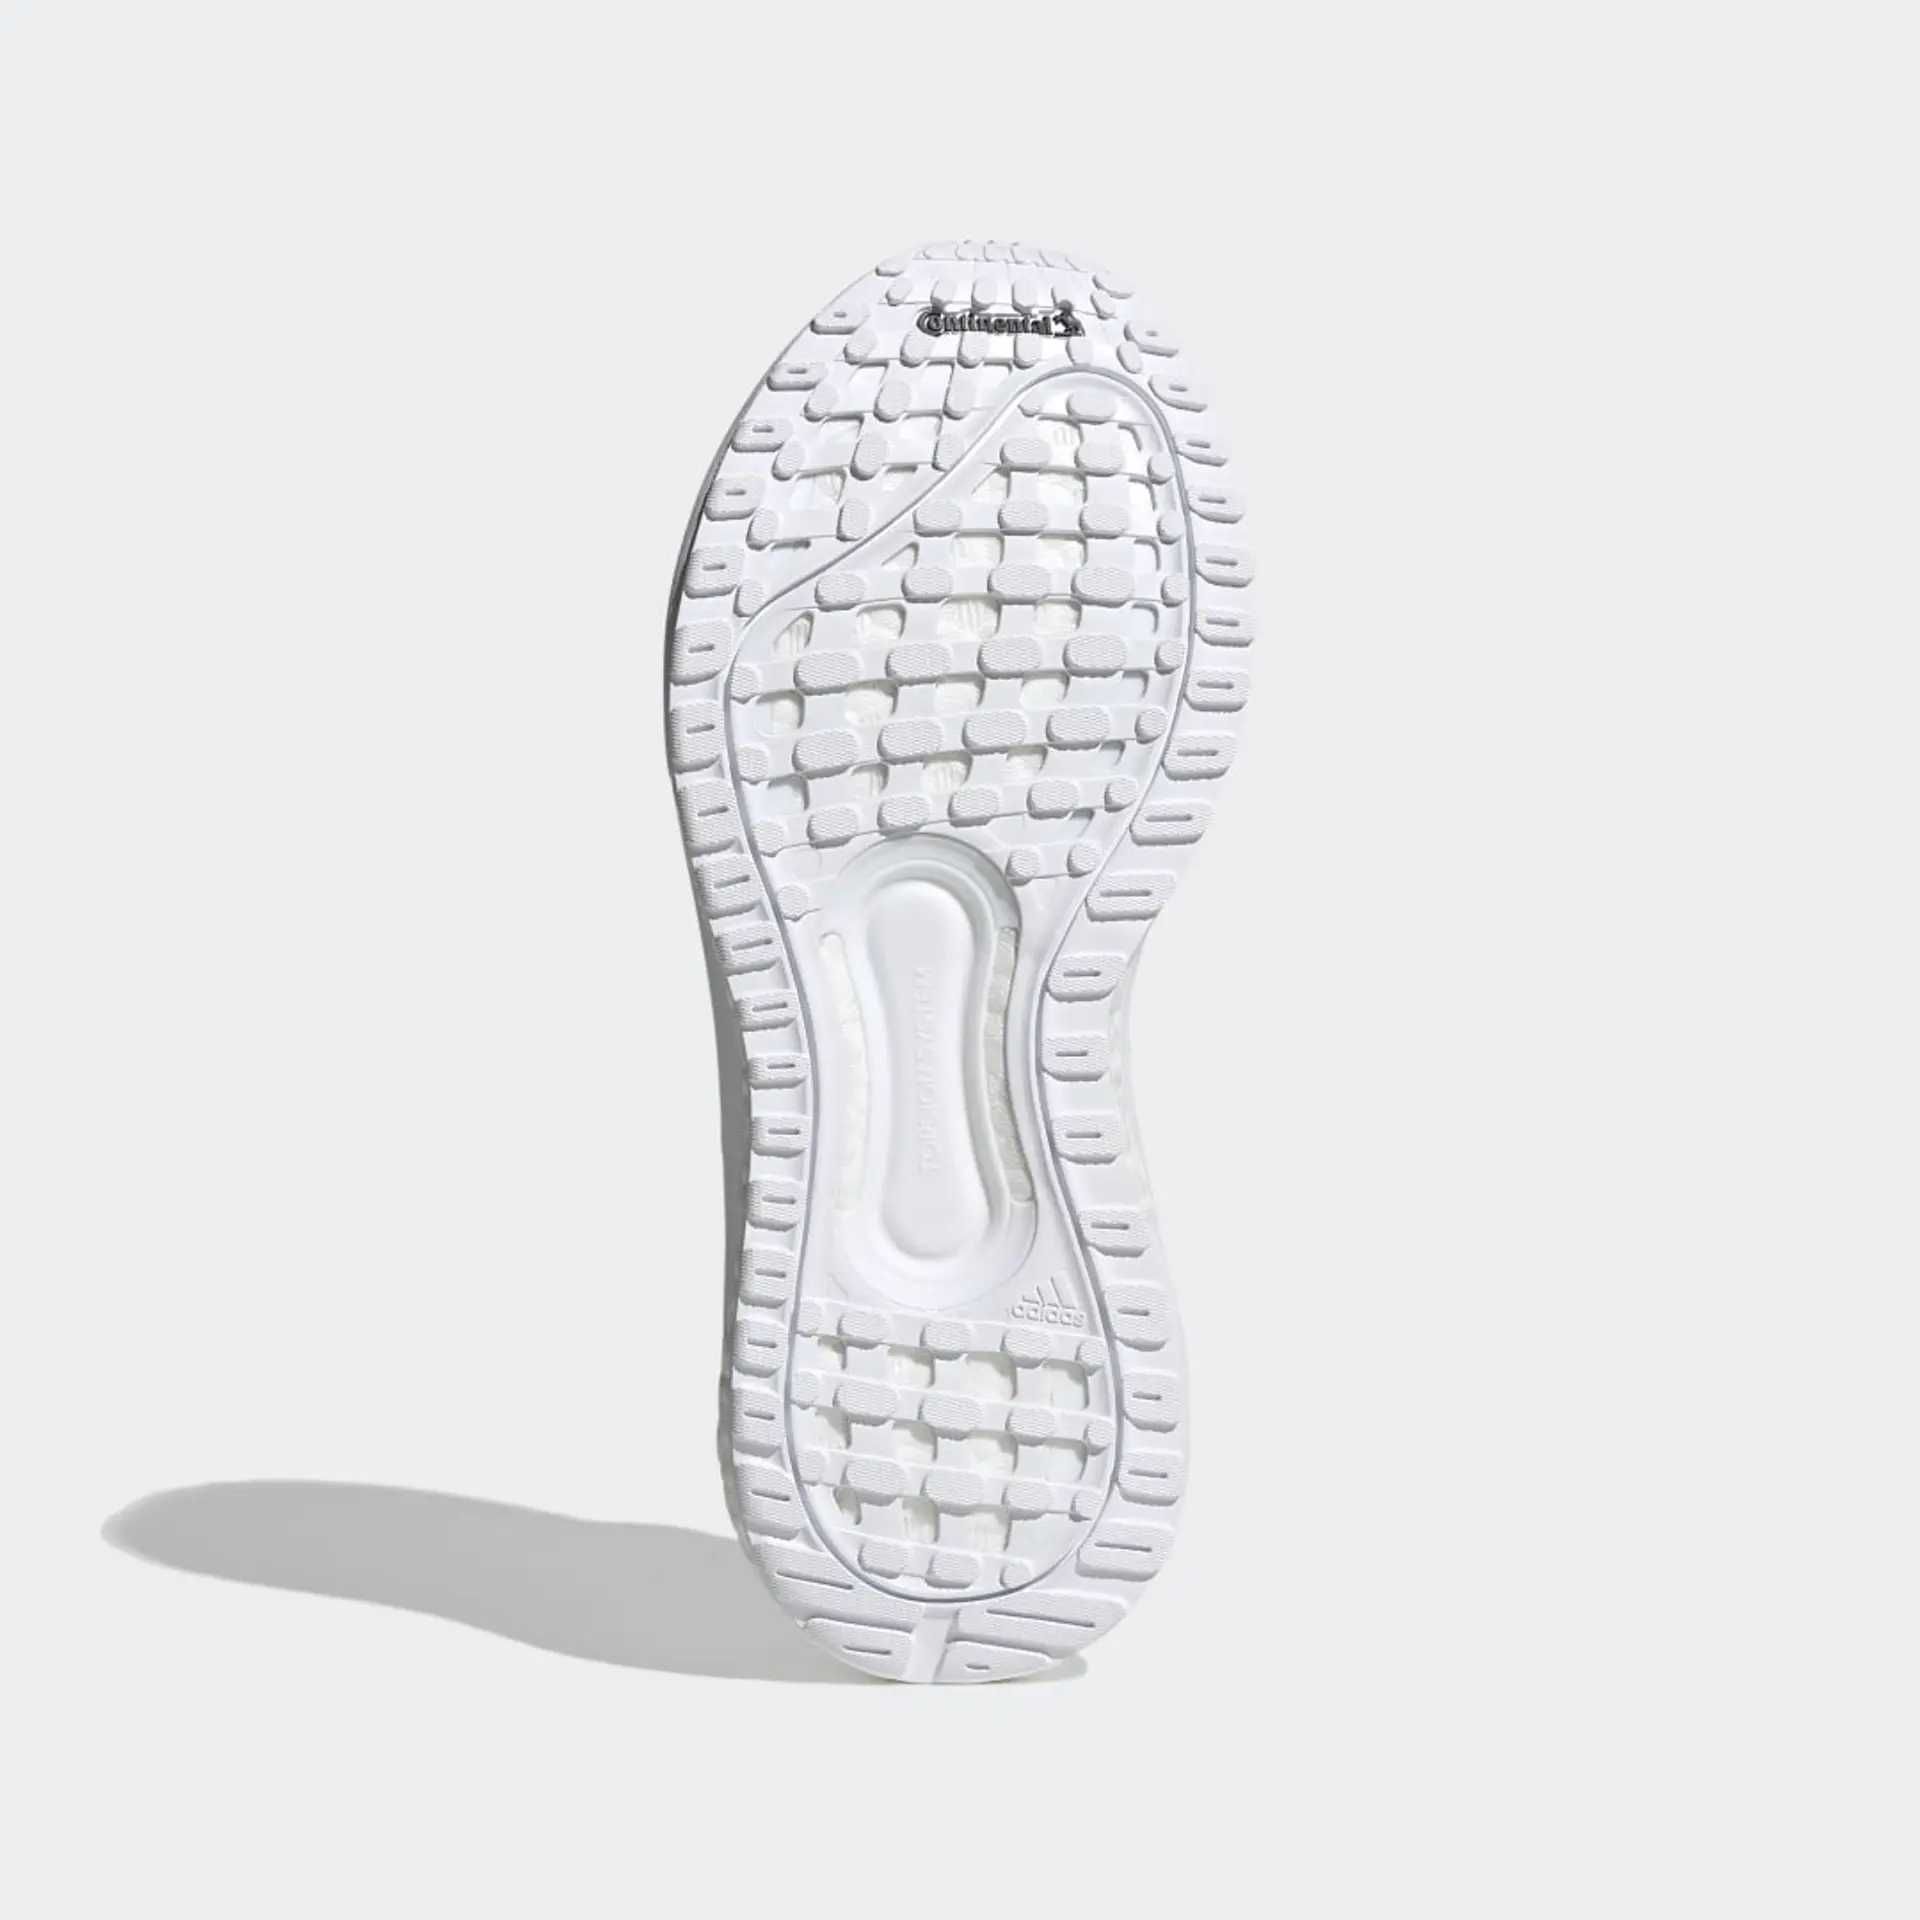 Adidas - SolarGlide Karlie Kloss №40 2/3 Оригинал Код 312